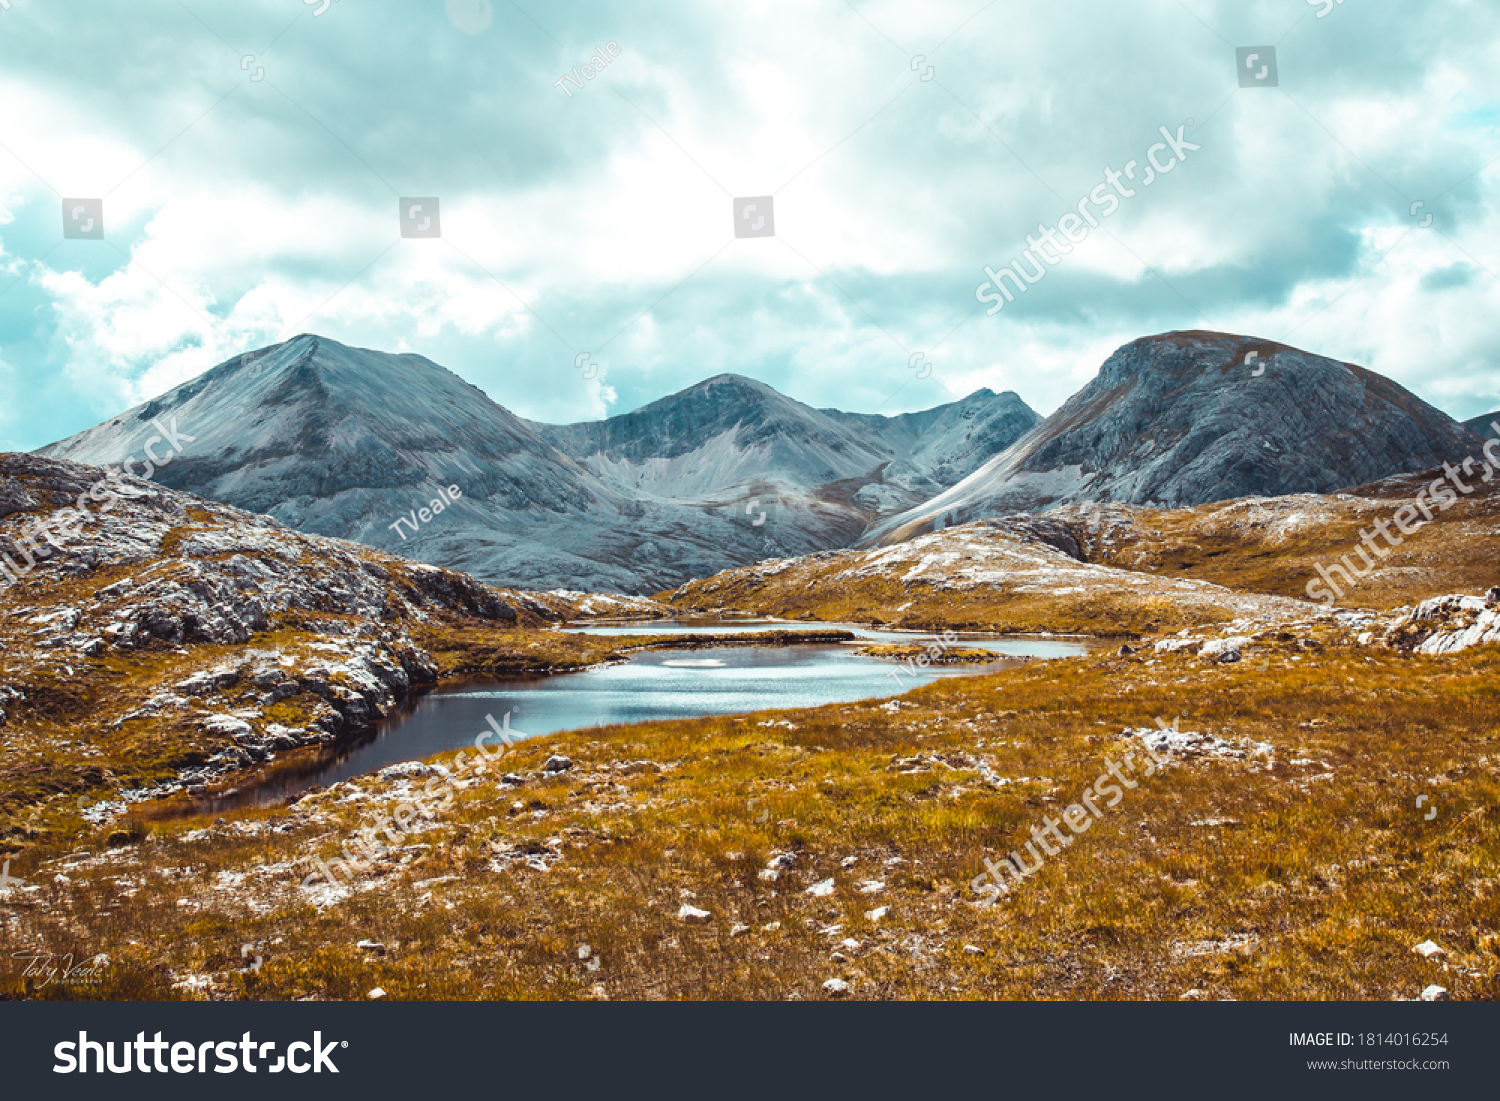 Beinn Eighe Mountain Trail on Scotland’s West Coast, with Blue and Orange tones #1814016254